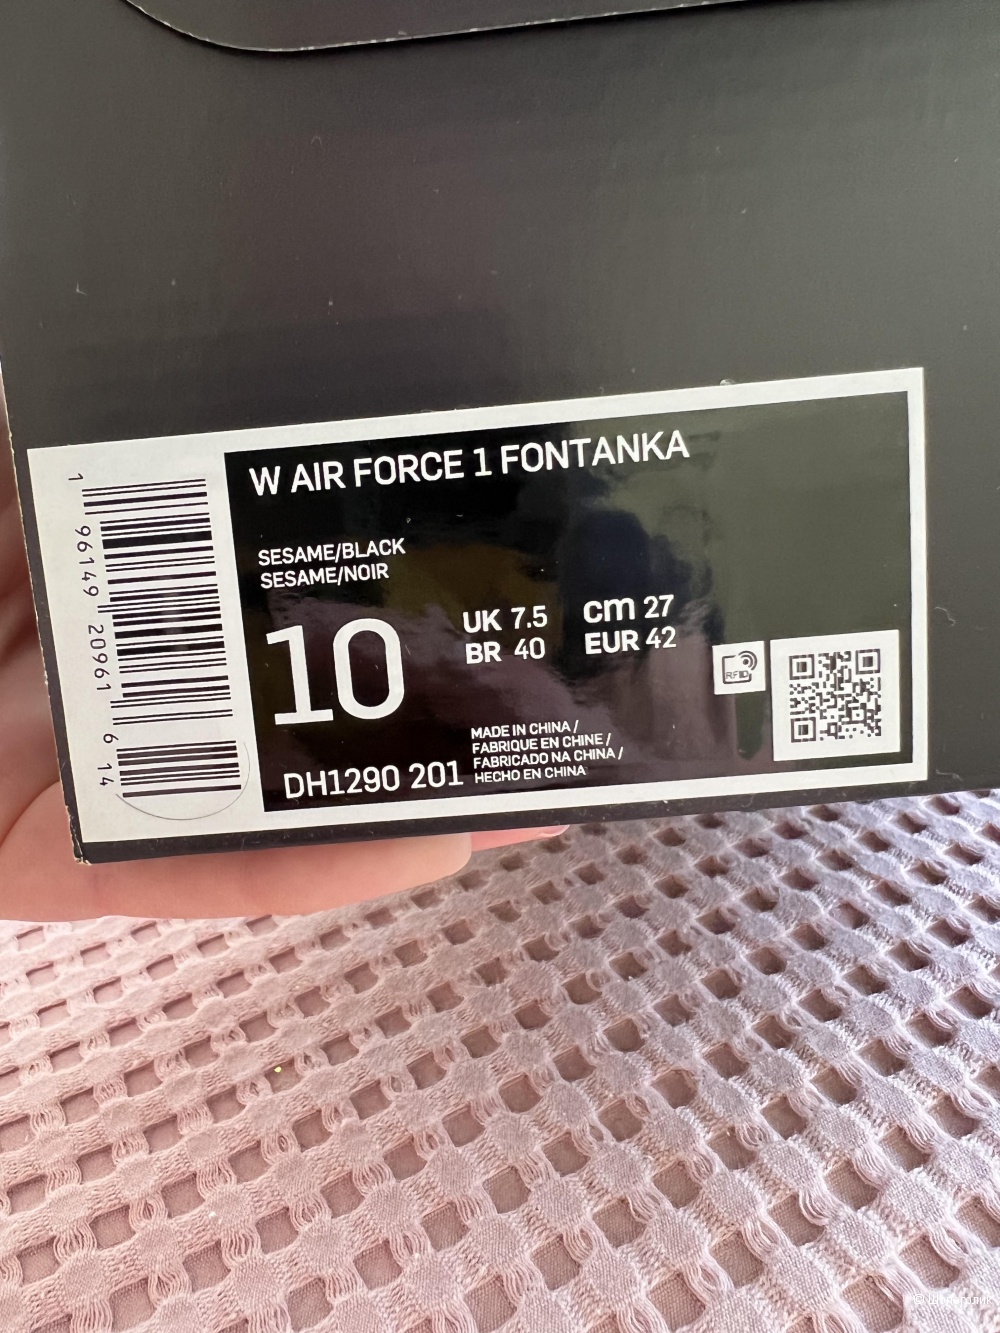 Кеды Nike Air Force 1 Fontanka, размер 40-41